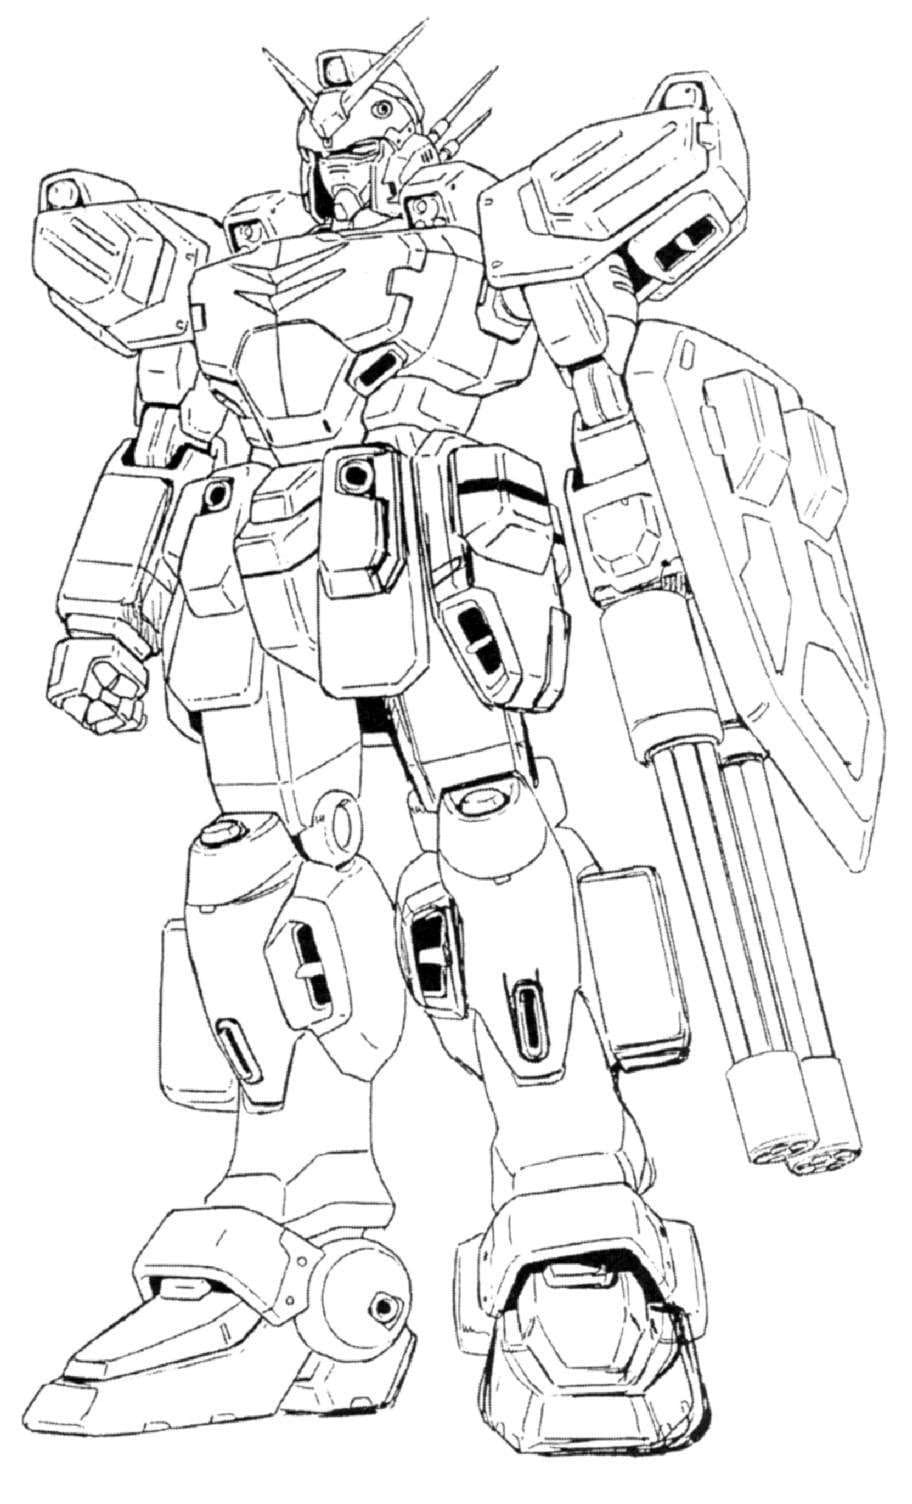 Gundam with Weapon